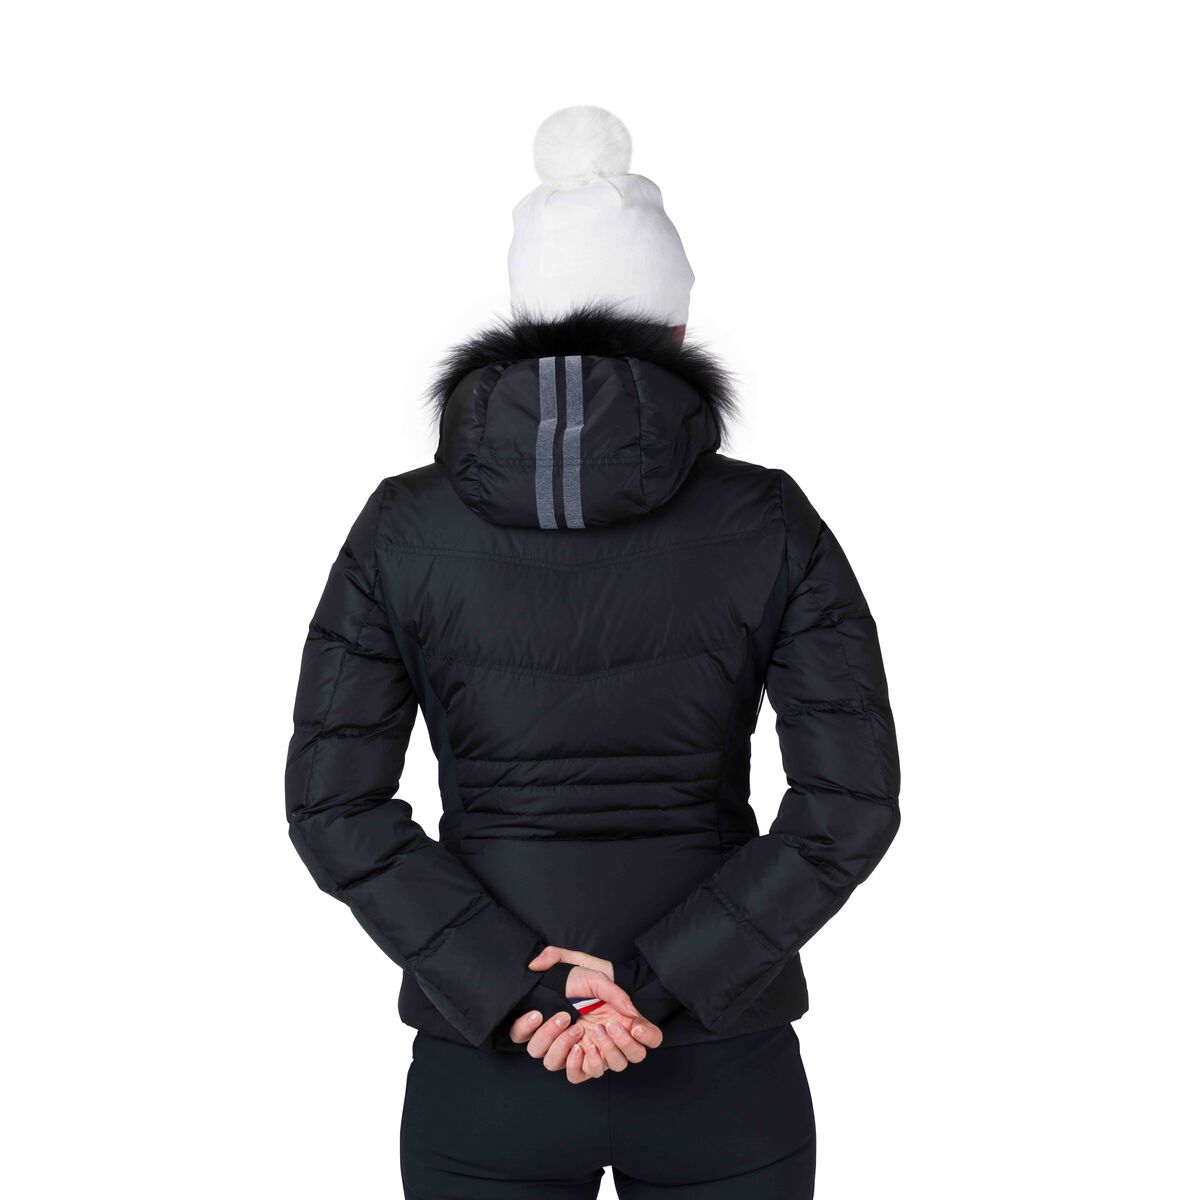 Rossignol Women's Ruby Merino Down Ski Jacket Black